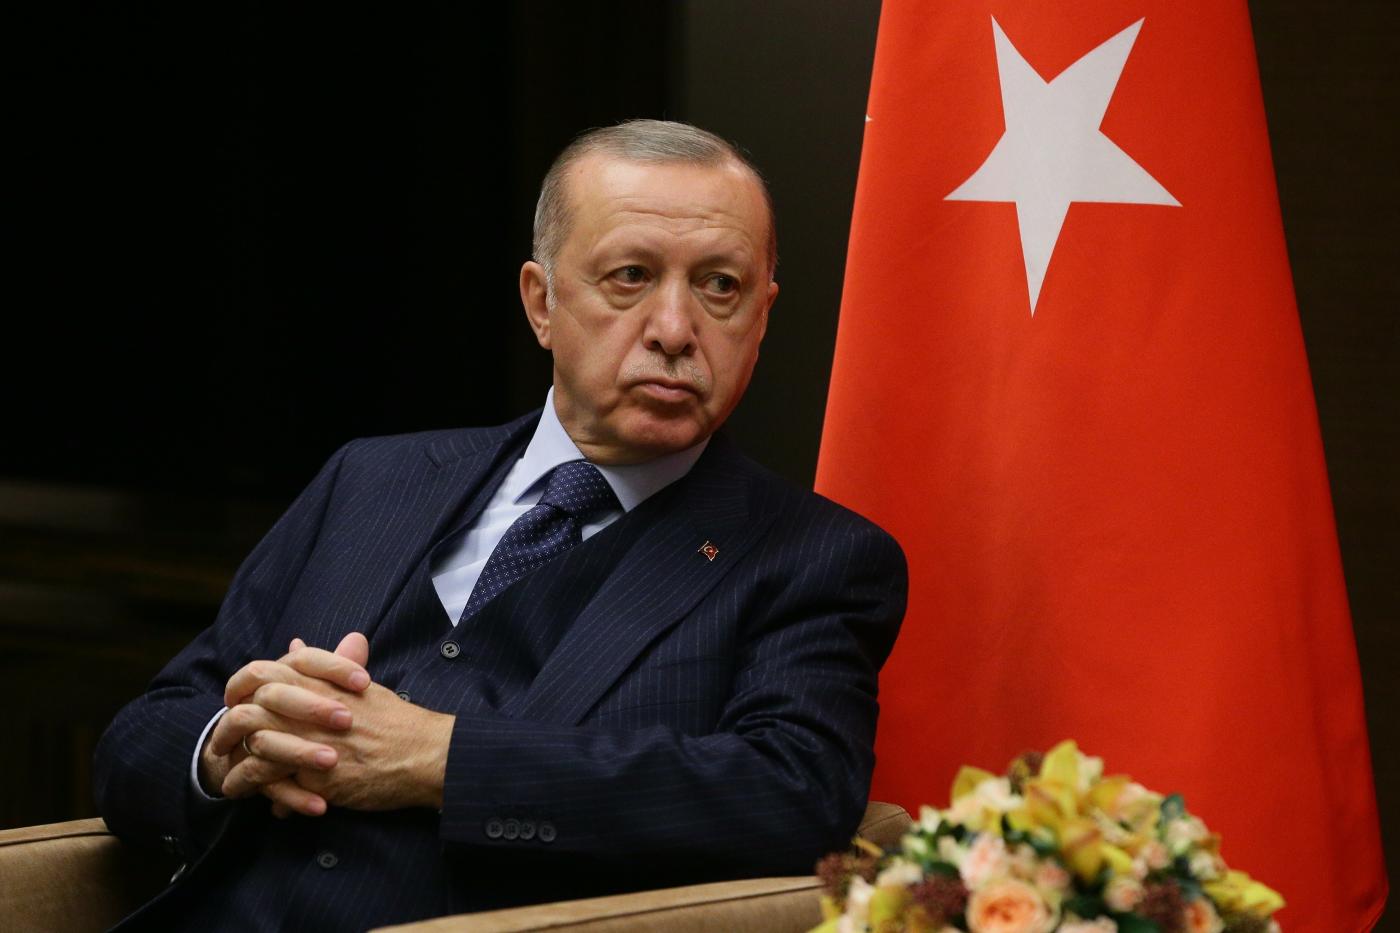 Sochi, il presidente turco Recep Tayyip Erdogan (La Presse)